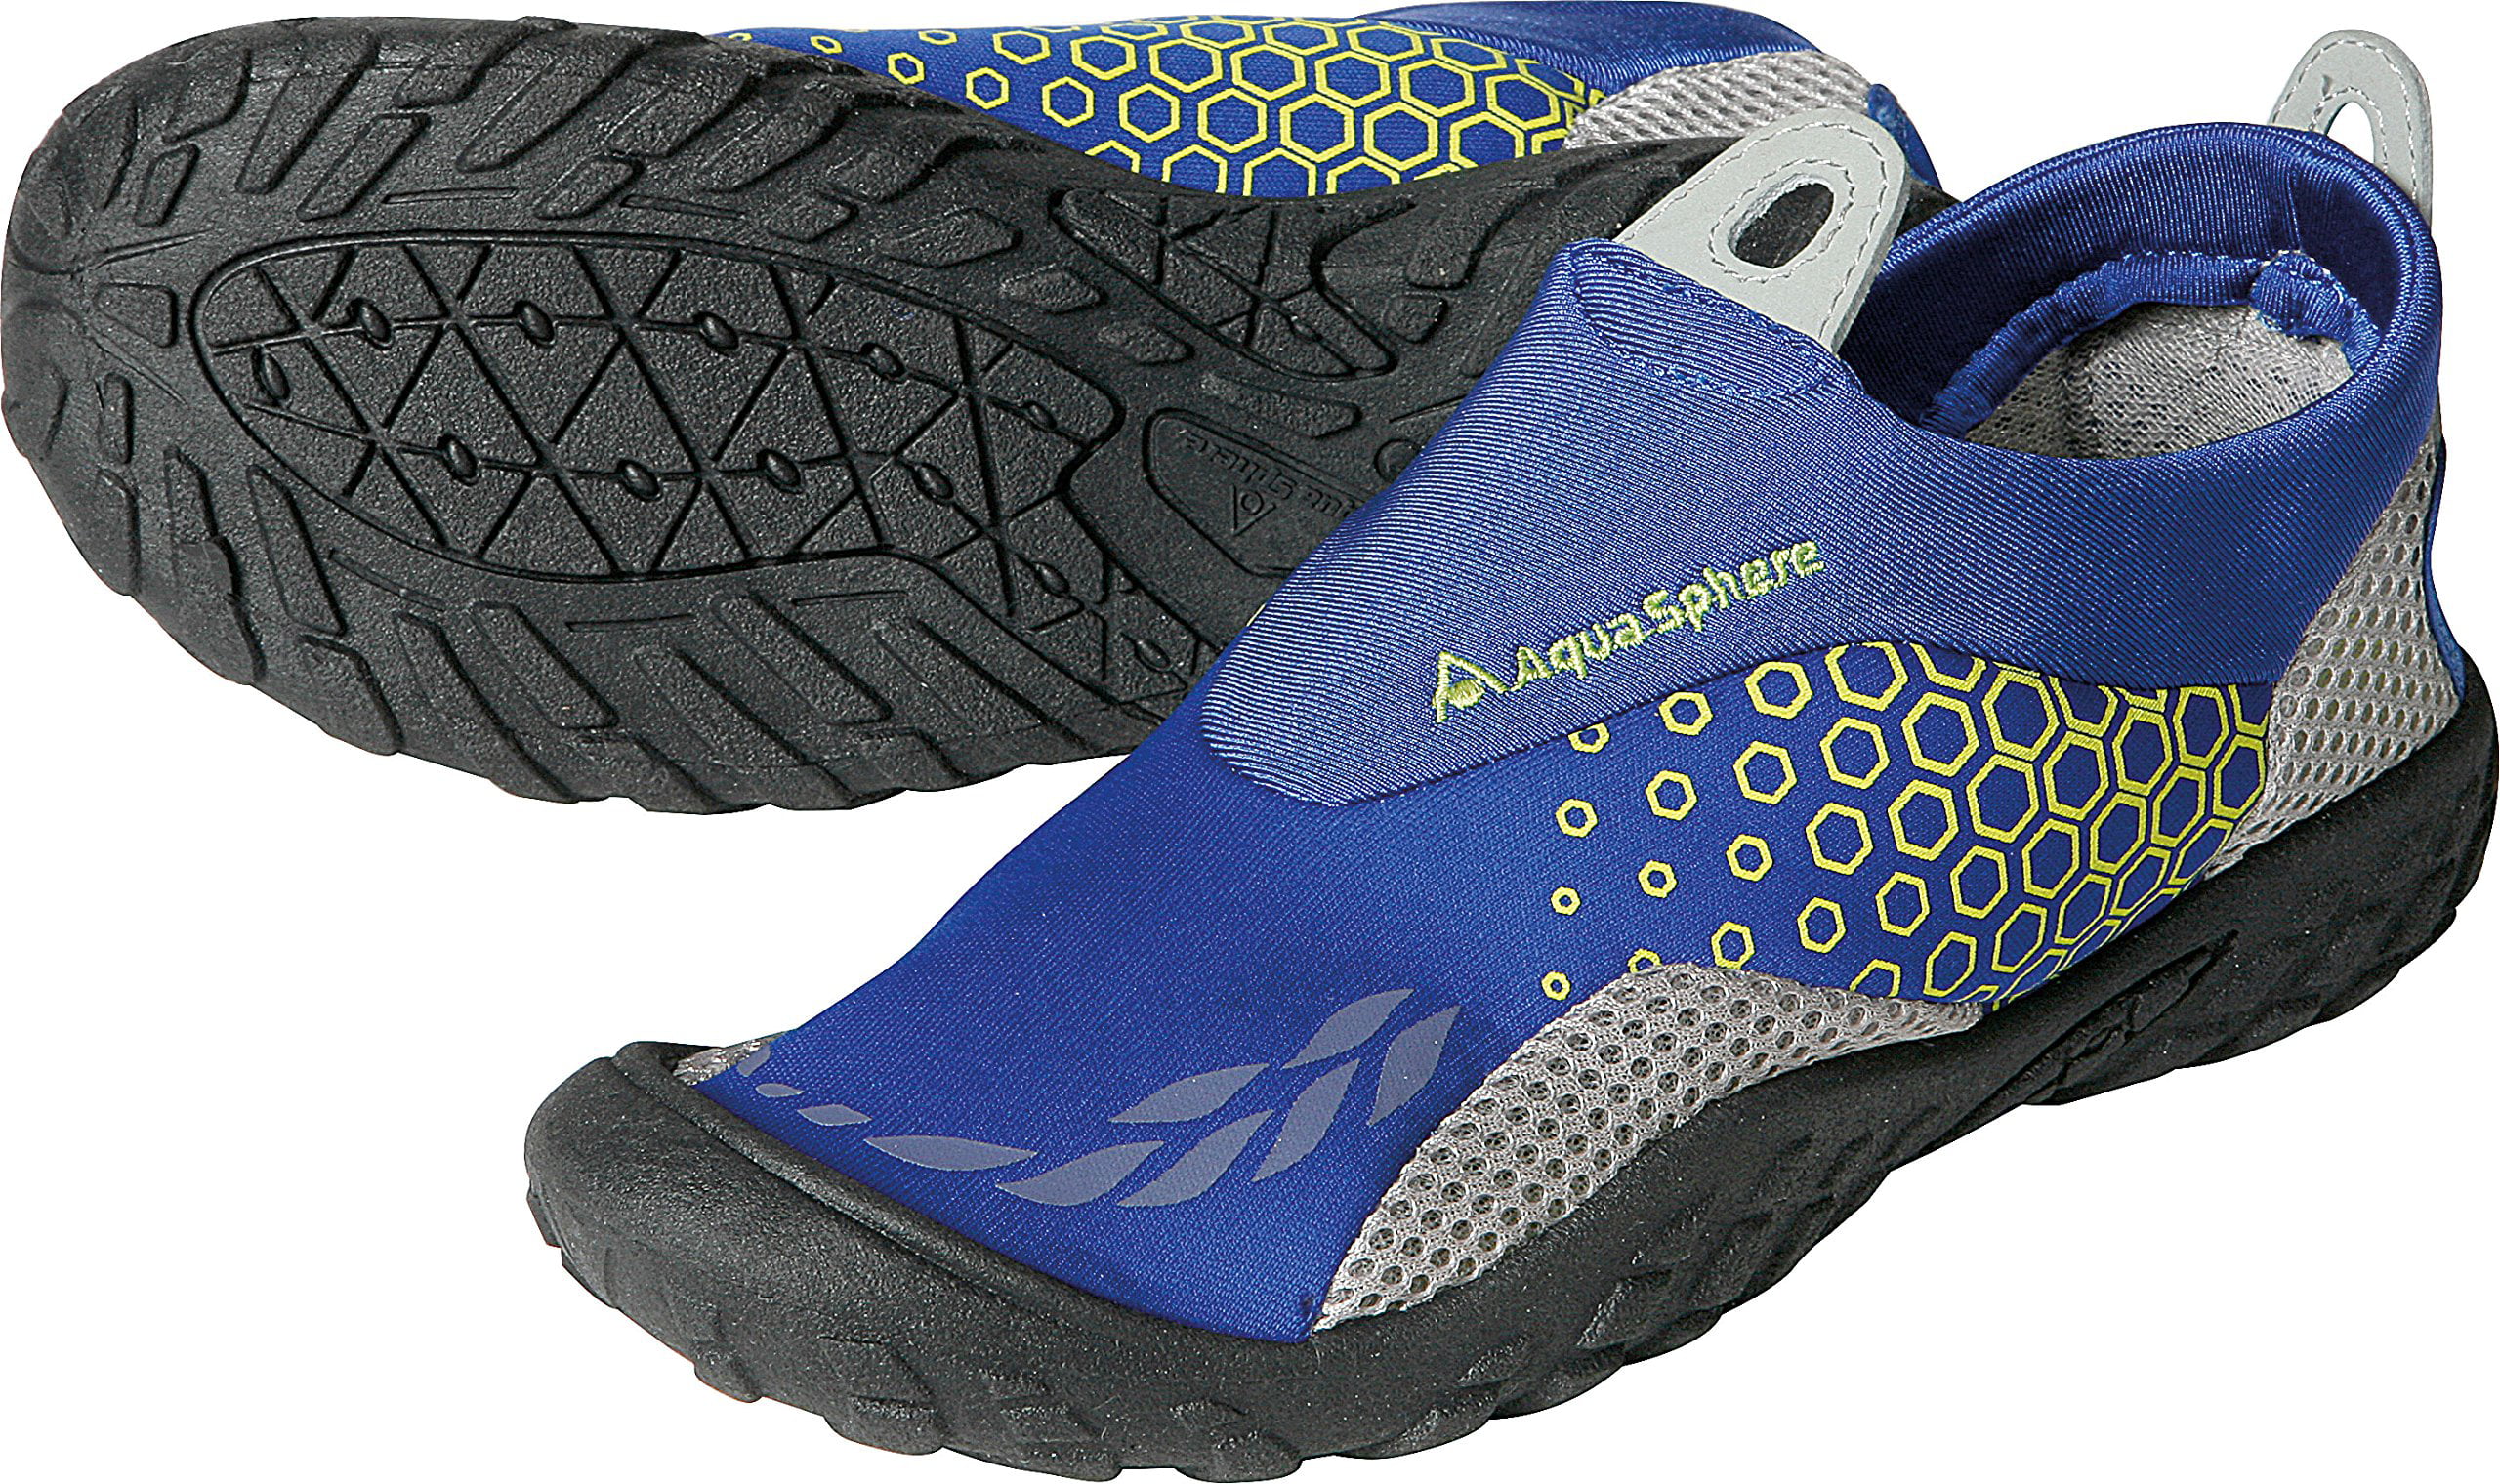 Aqua Sphere Sporter Nyloprene Beach Pool Shoes Sandals Leisure Aquatic Footwear 